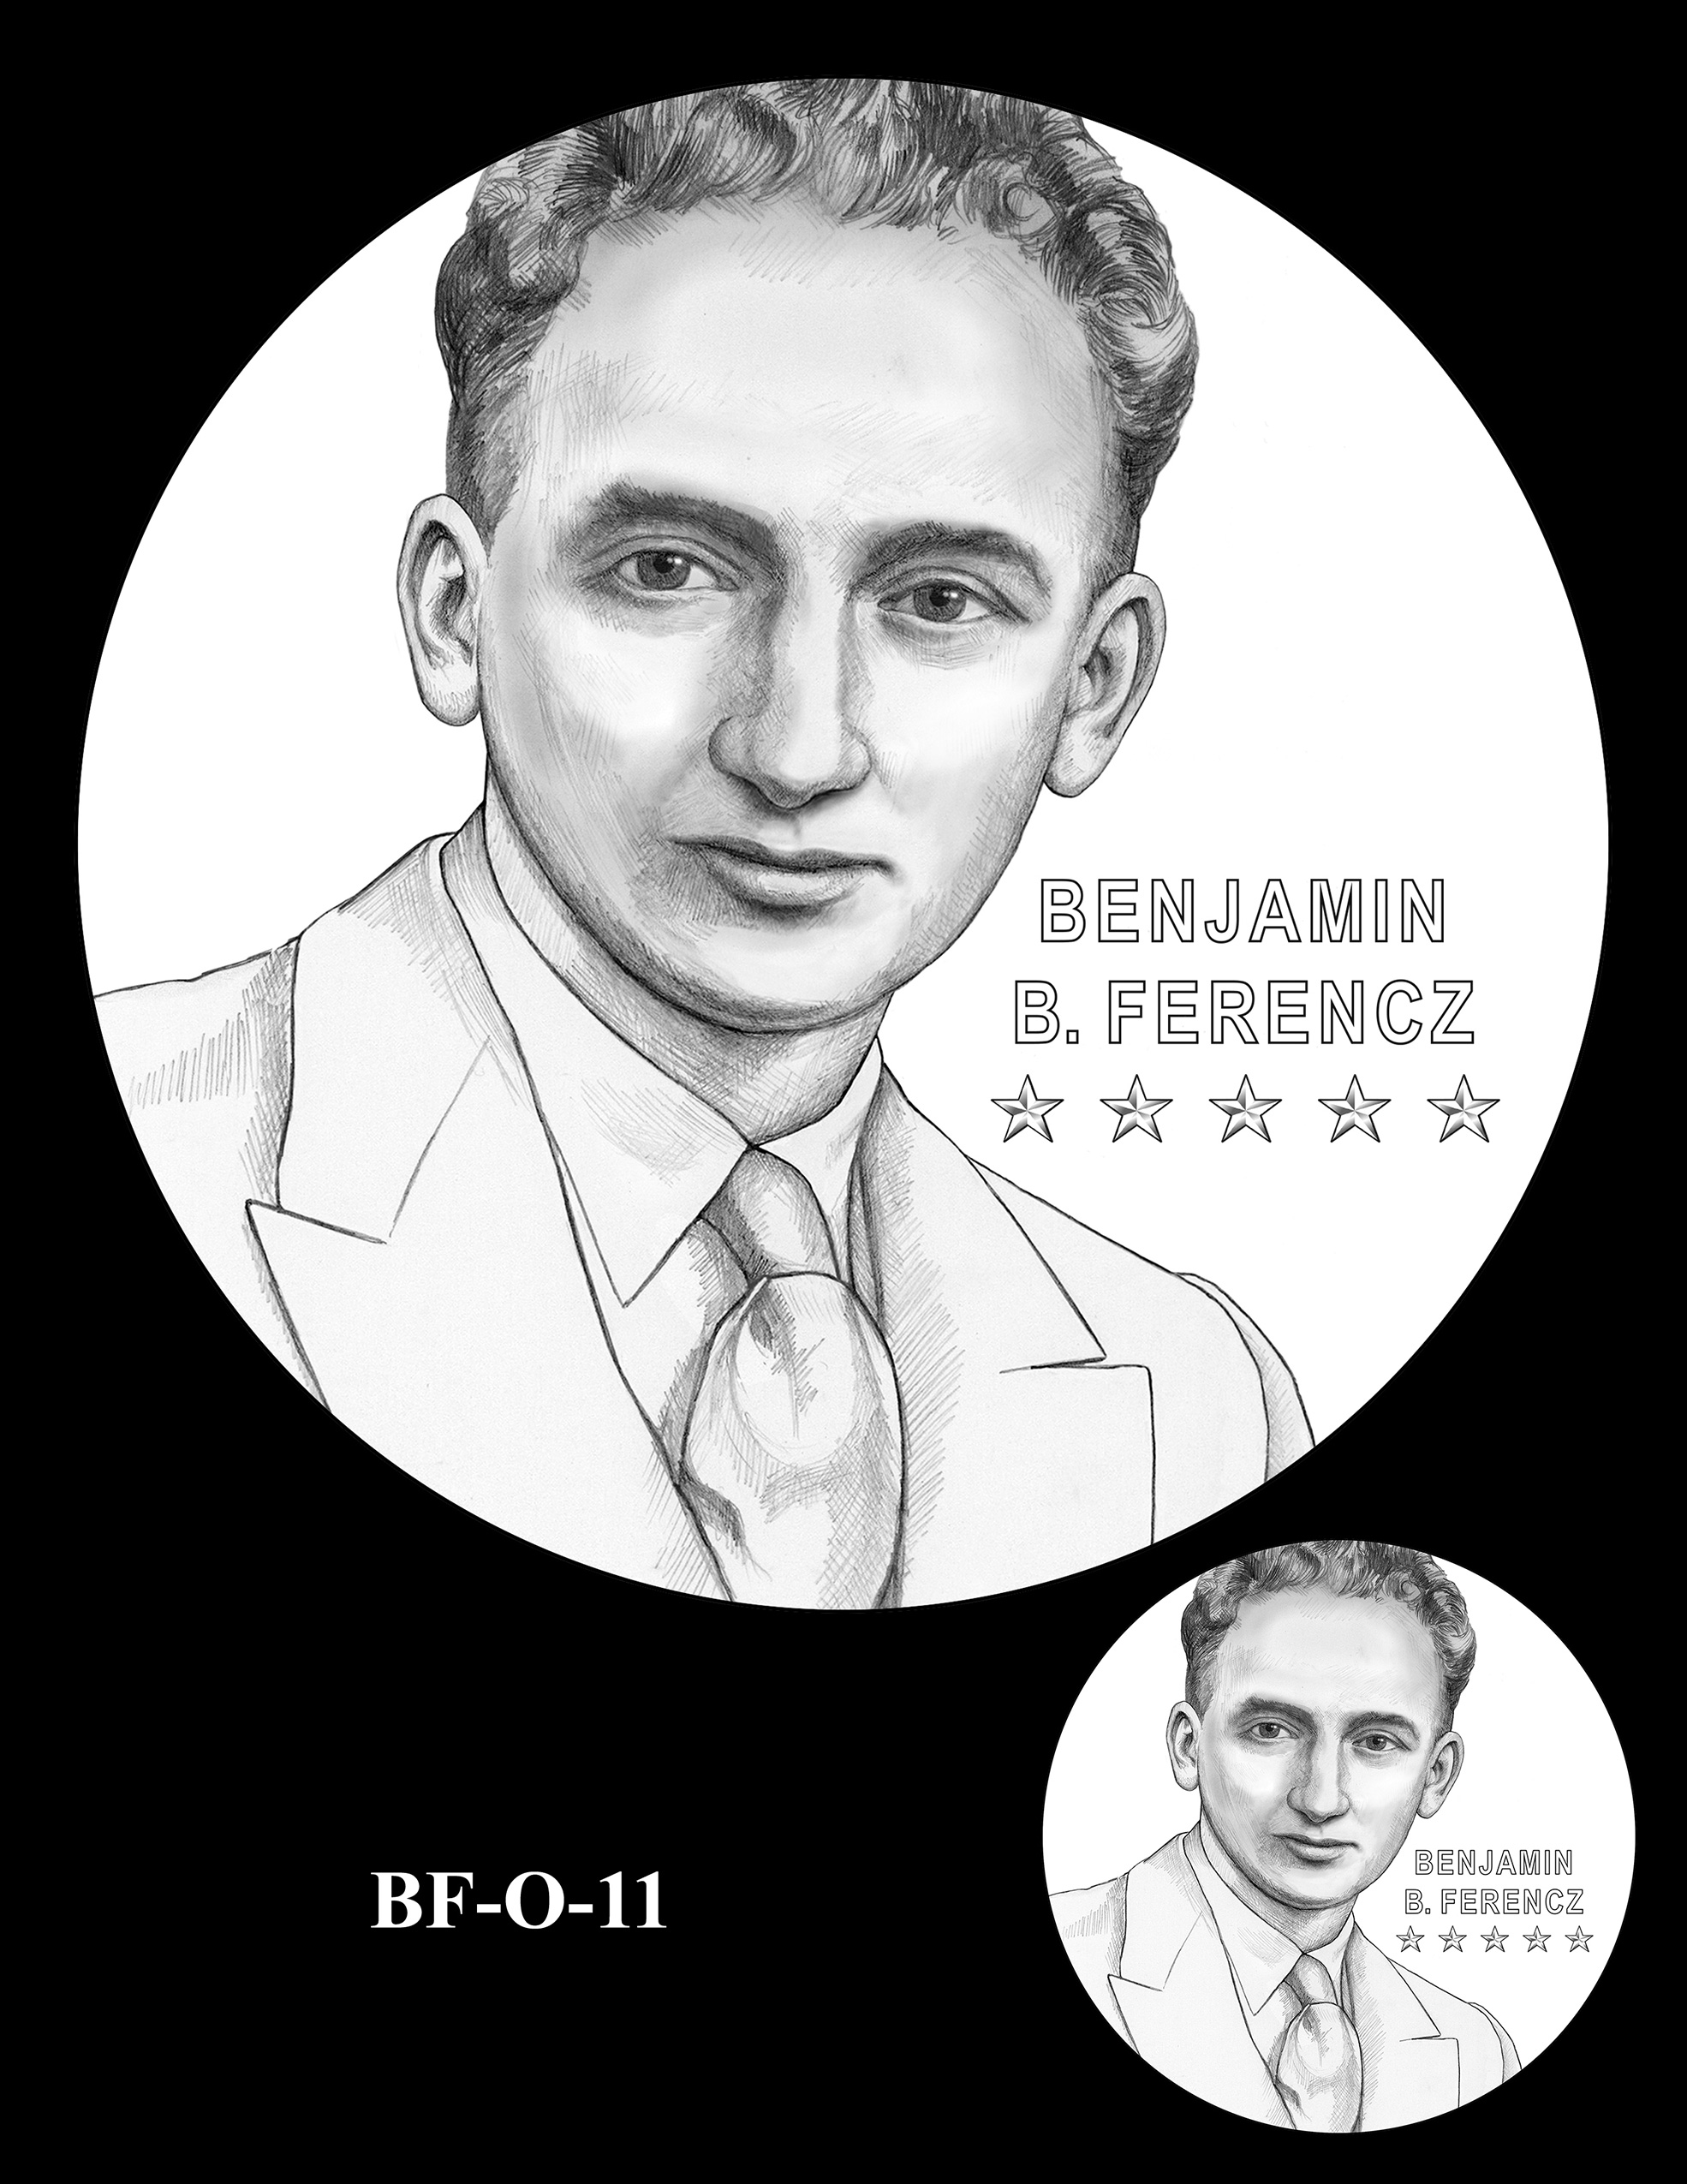 BF-O-11 -- Benjamin Ferencz Congressional Gold Medal